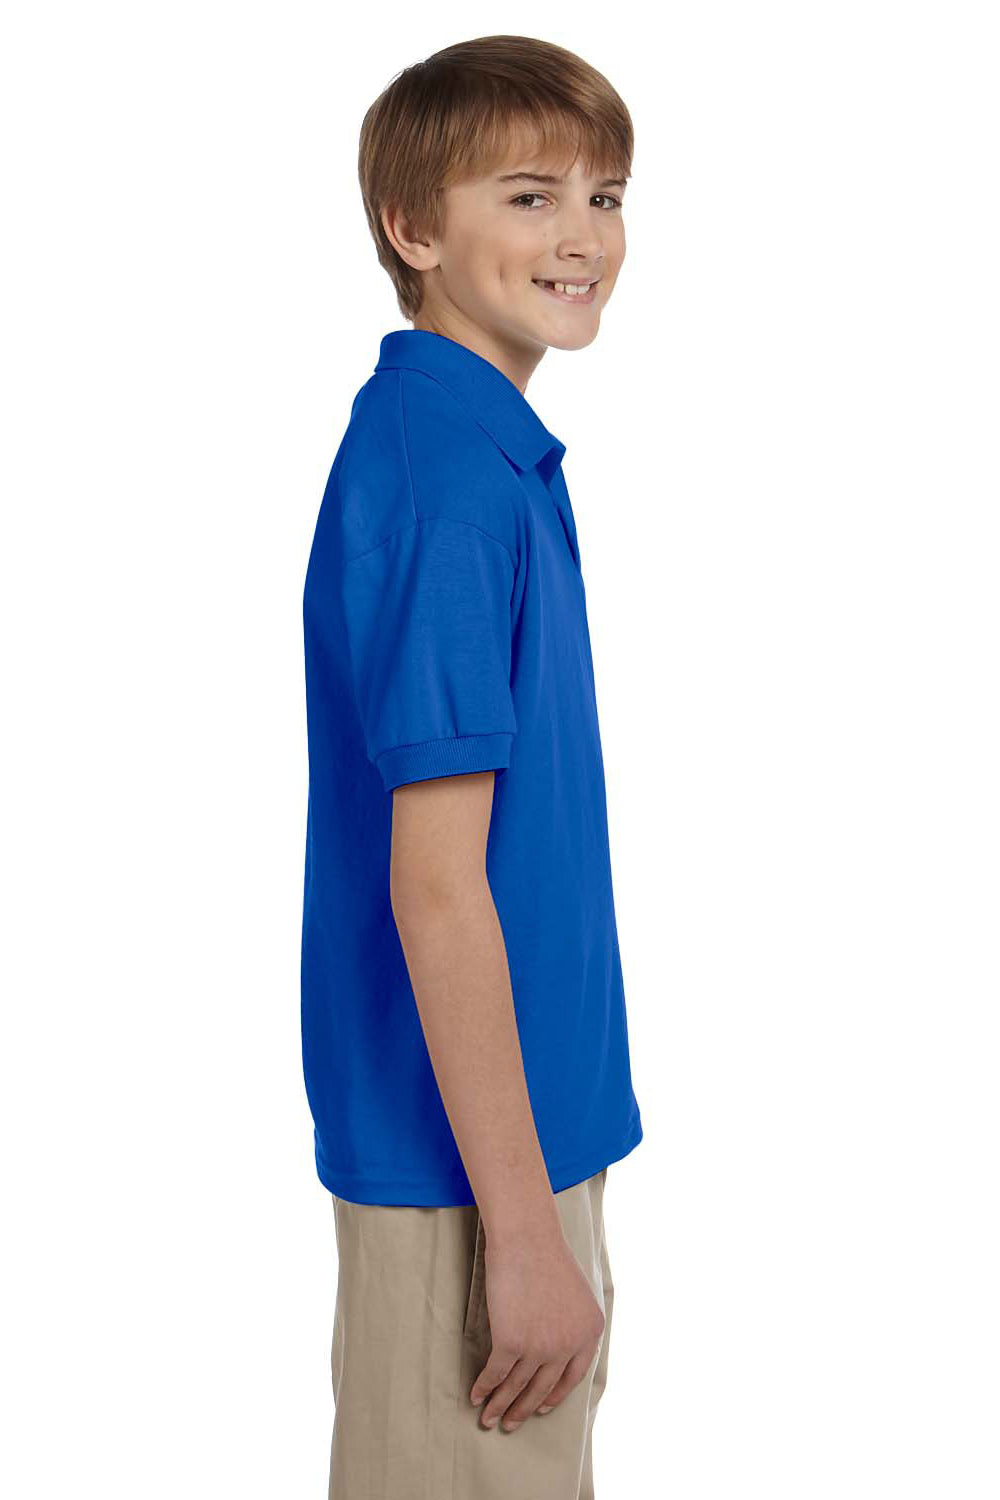 Gildan G880B Youth DryBlend Moisture Wicking Short Sleeve Polo Shirt Royal Blue Side